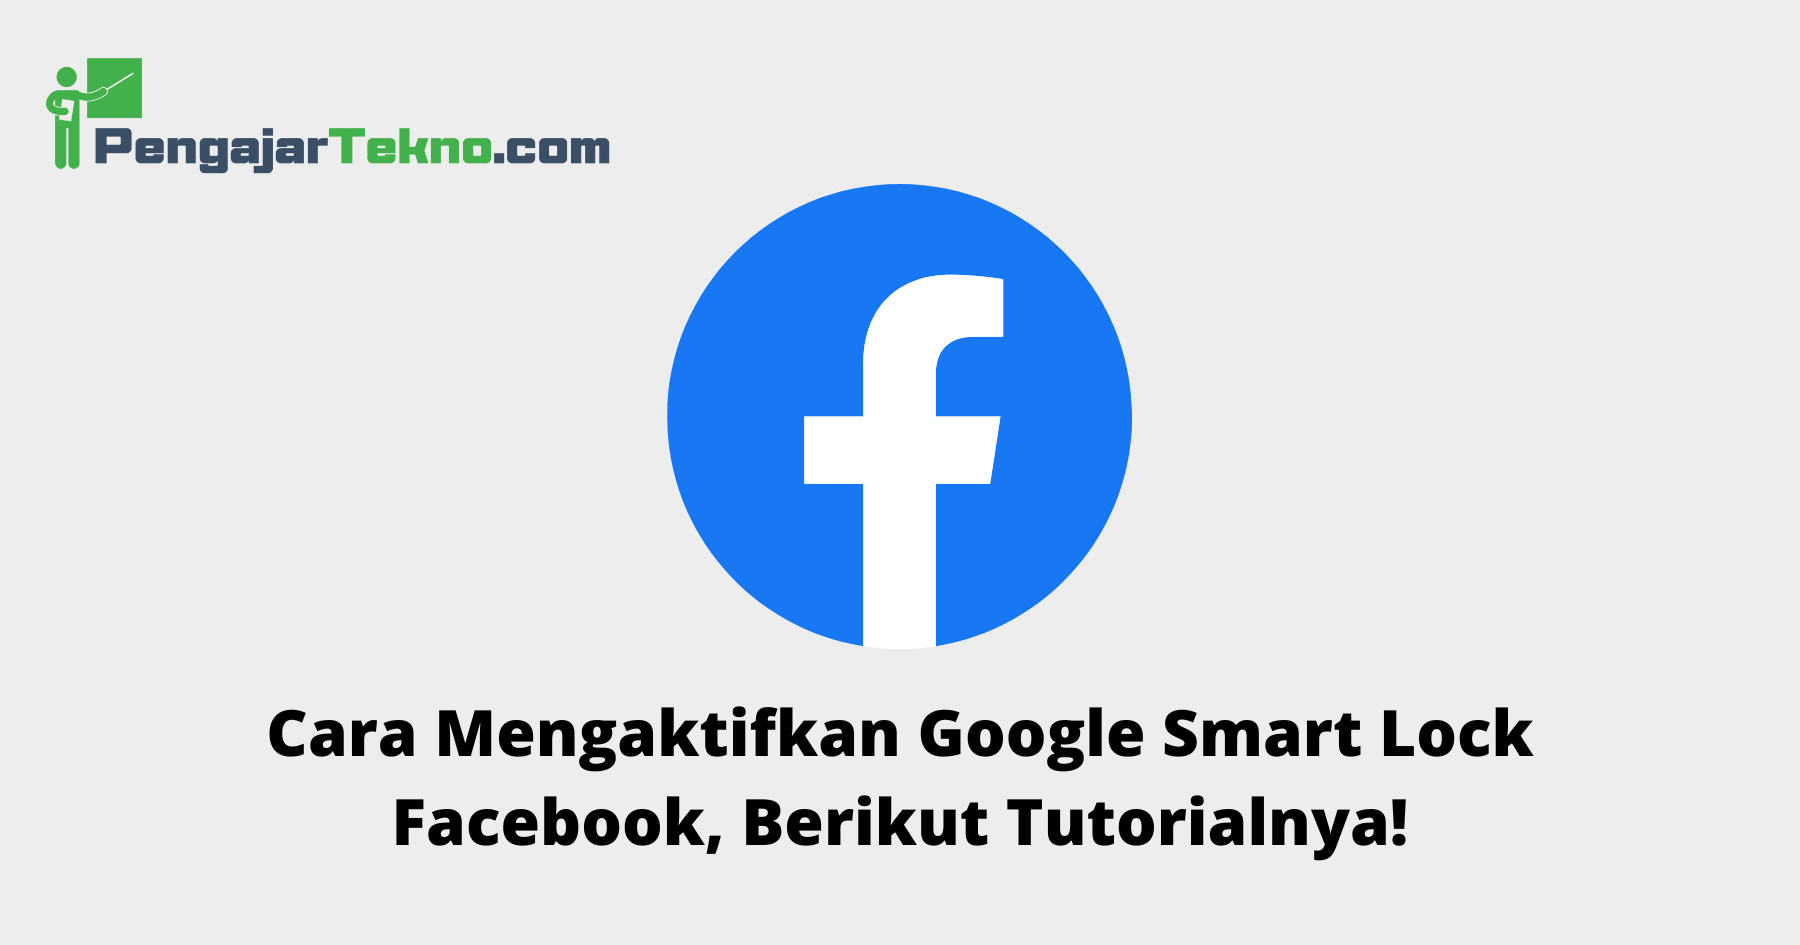 Google Smart Lock Facebook